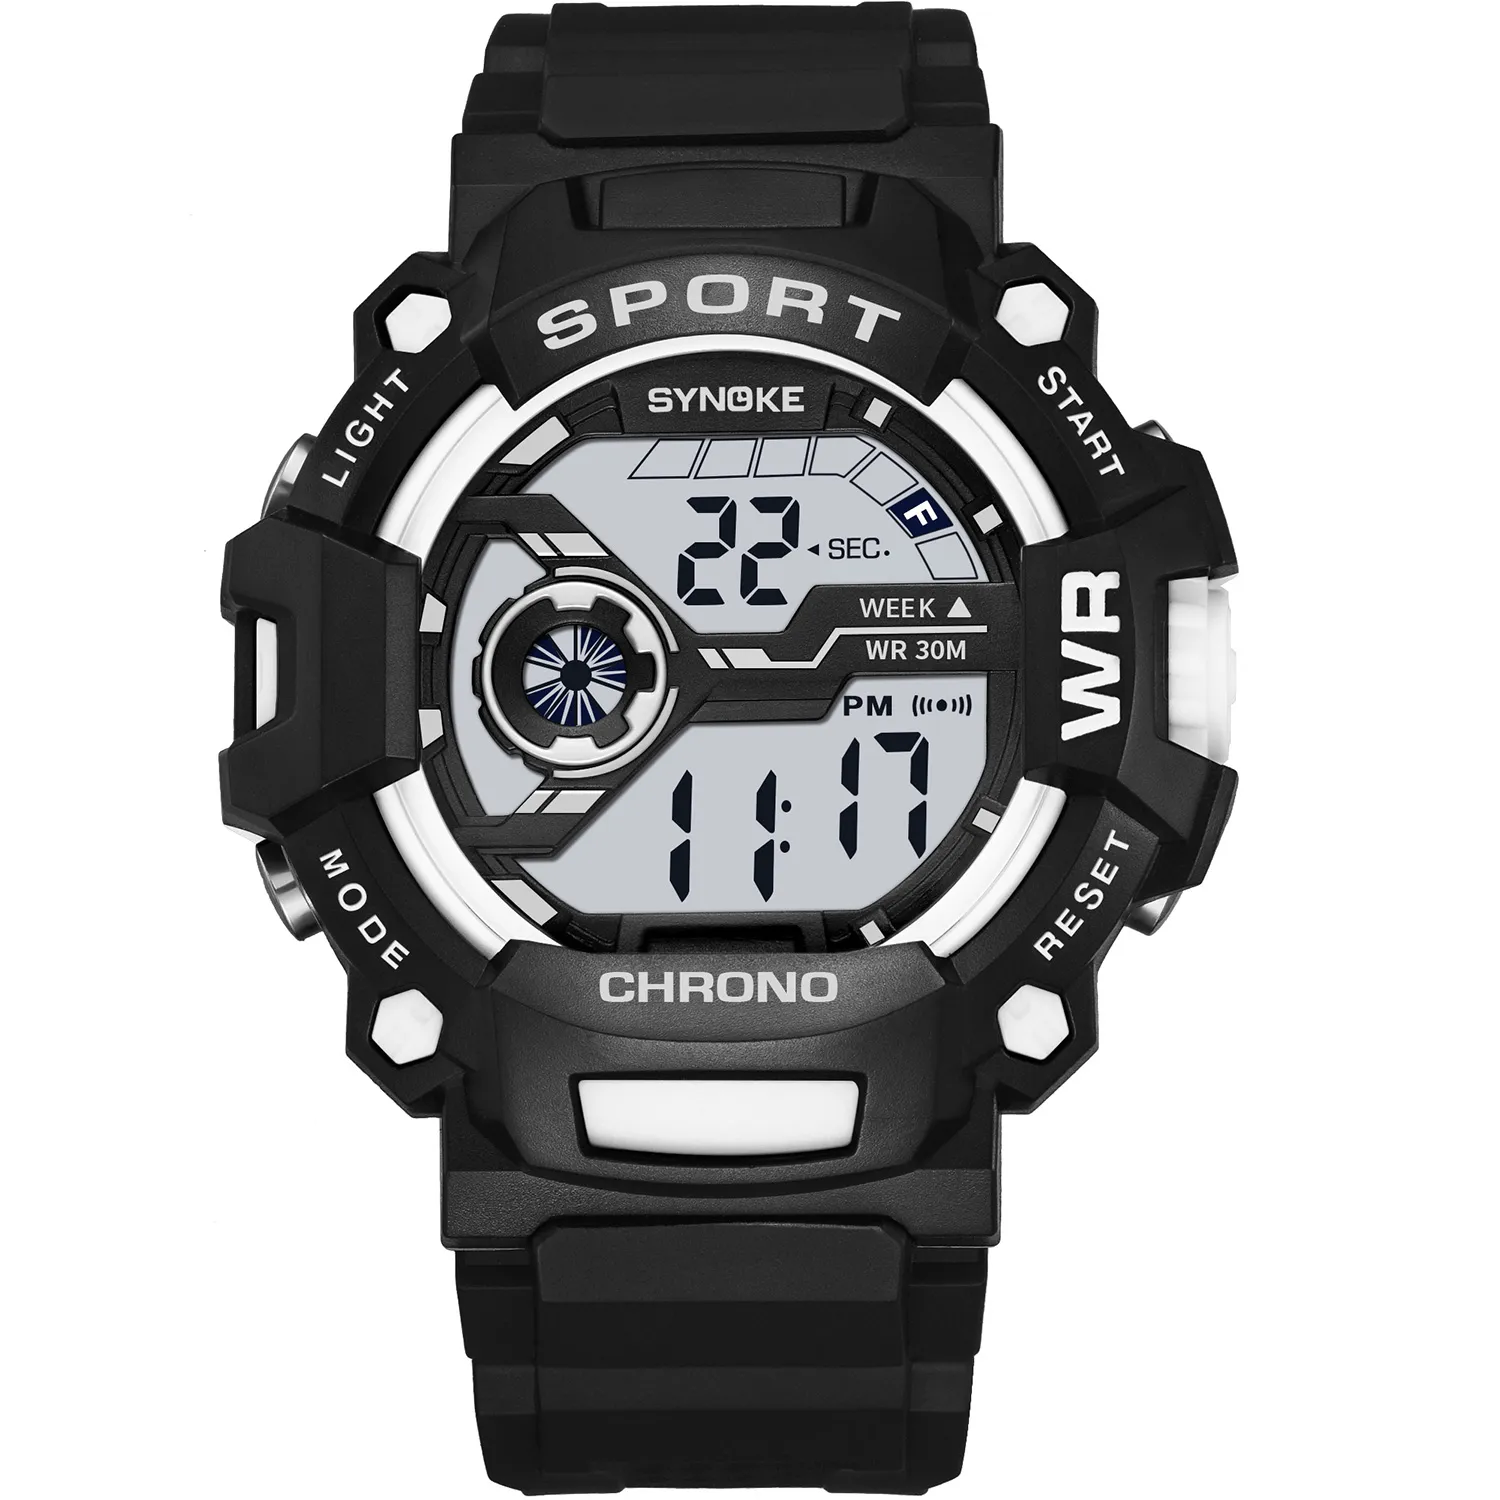 PANARS moda uomo orologio digitale impermeabile sport all'aria aperta orologi da polso sportivi orologio elettronico a LED Men302R